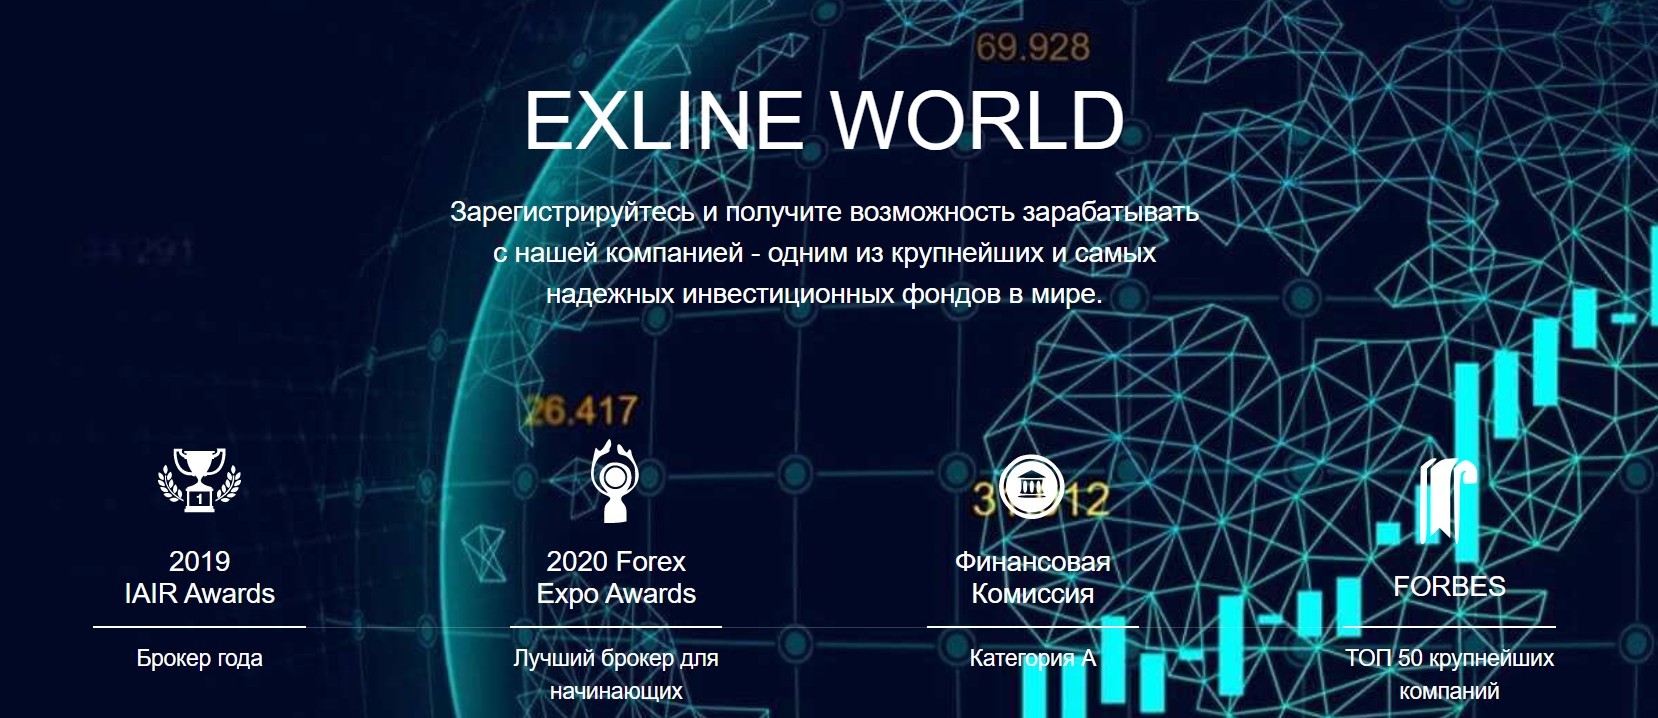 Обзор компании Exline World